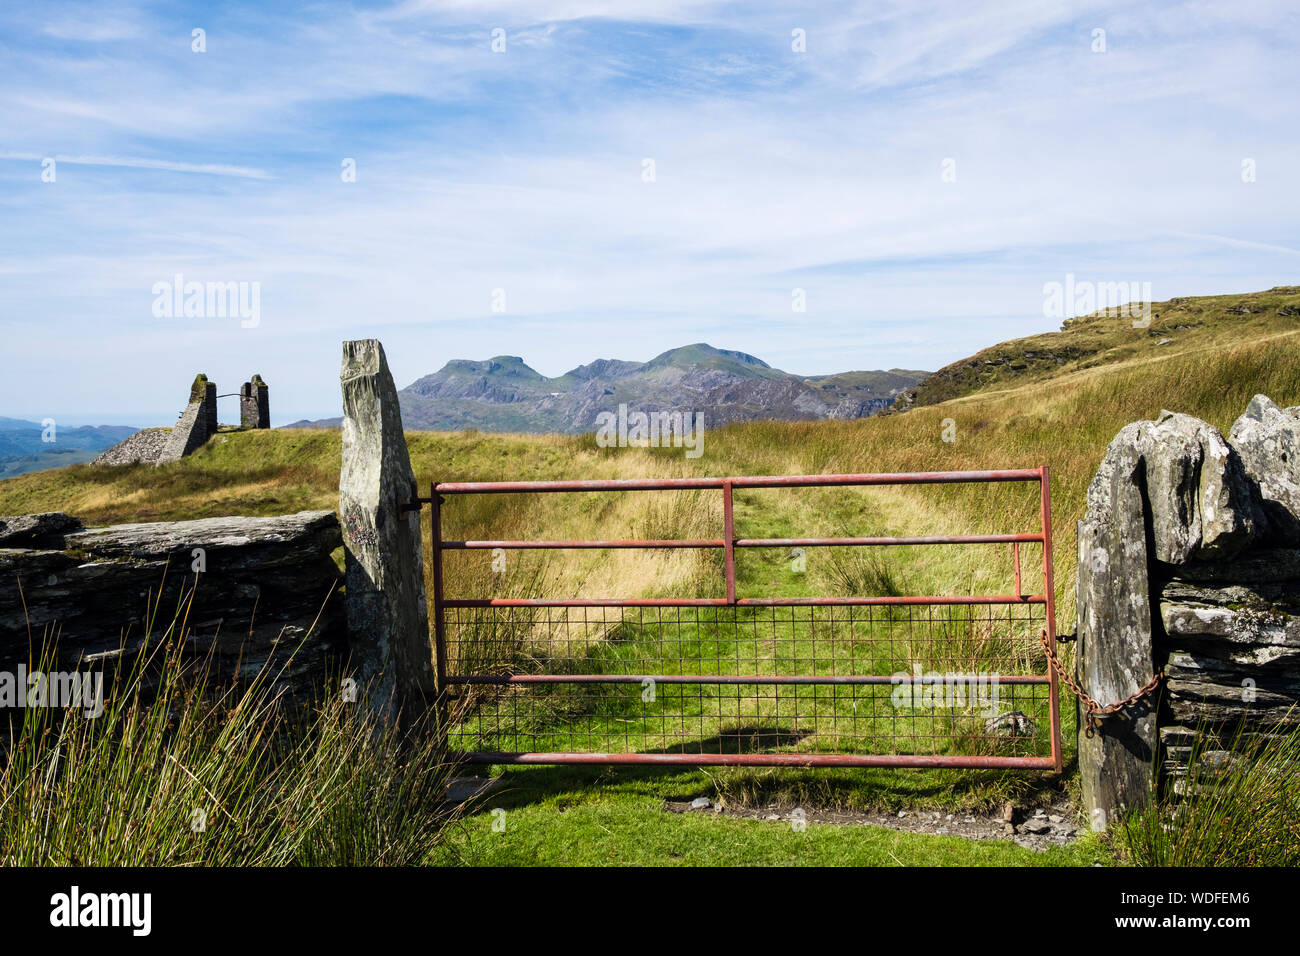 View to Moelwyns and metal farm gate in a dry stone wall on a country track through moorland in hills around Blaenau Ffestiniog, Gwynedd, Wales, UK Stock Photo